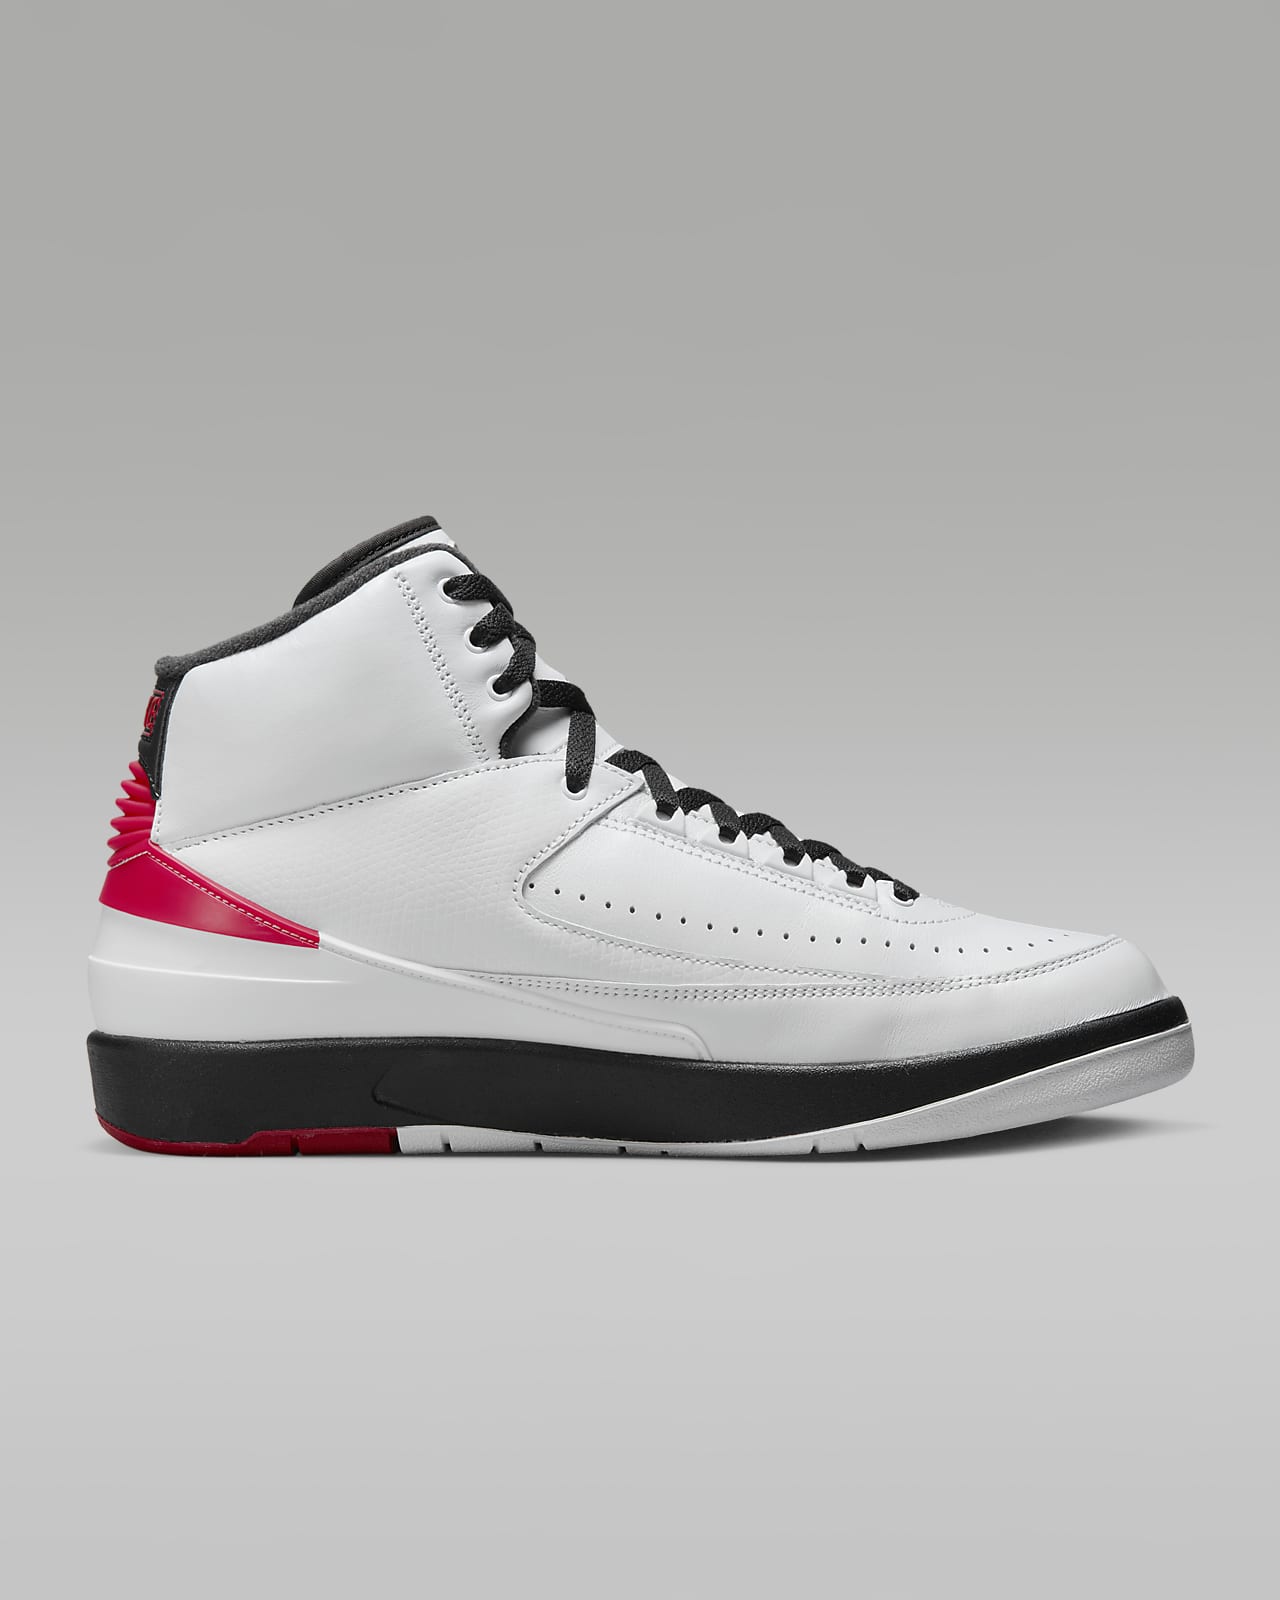 Nike Jordan One Take Ii Unisex Shoes Size 11.5, Color: Black/Black/Grey 